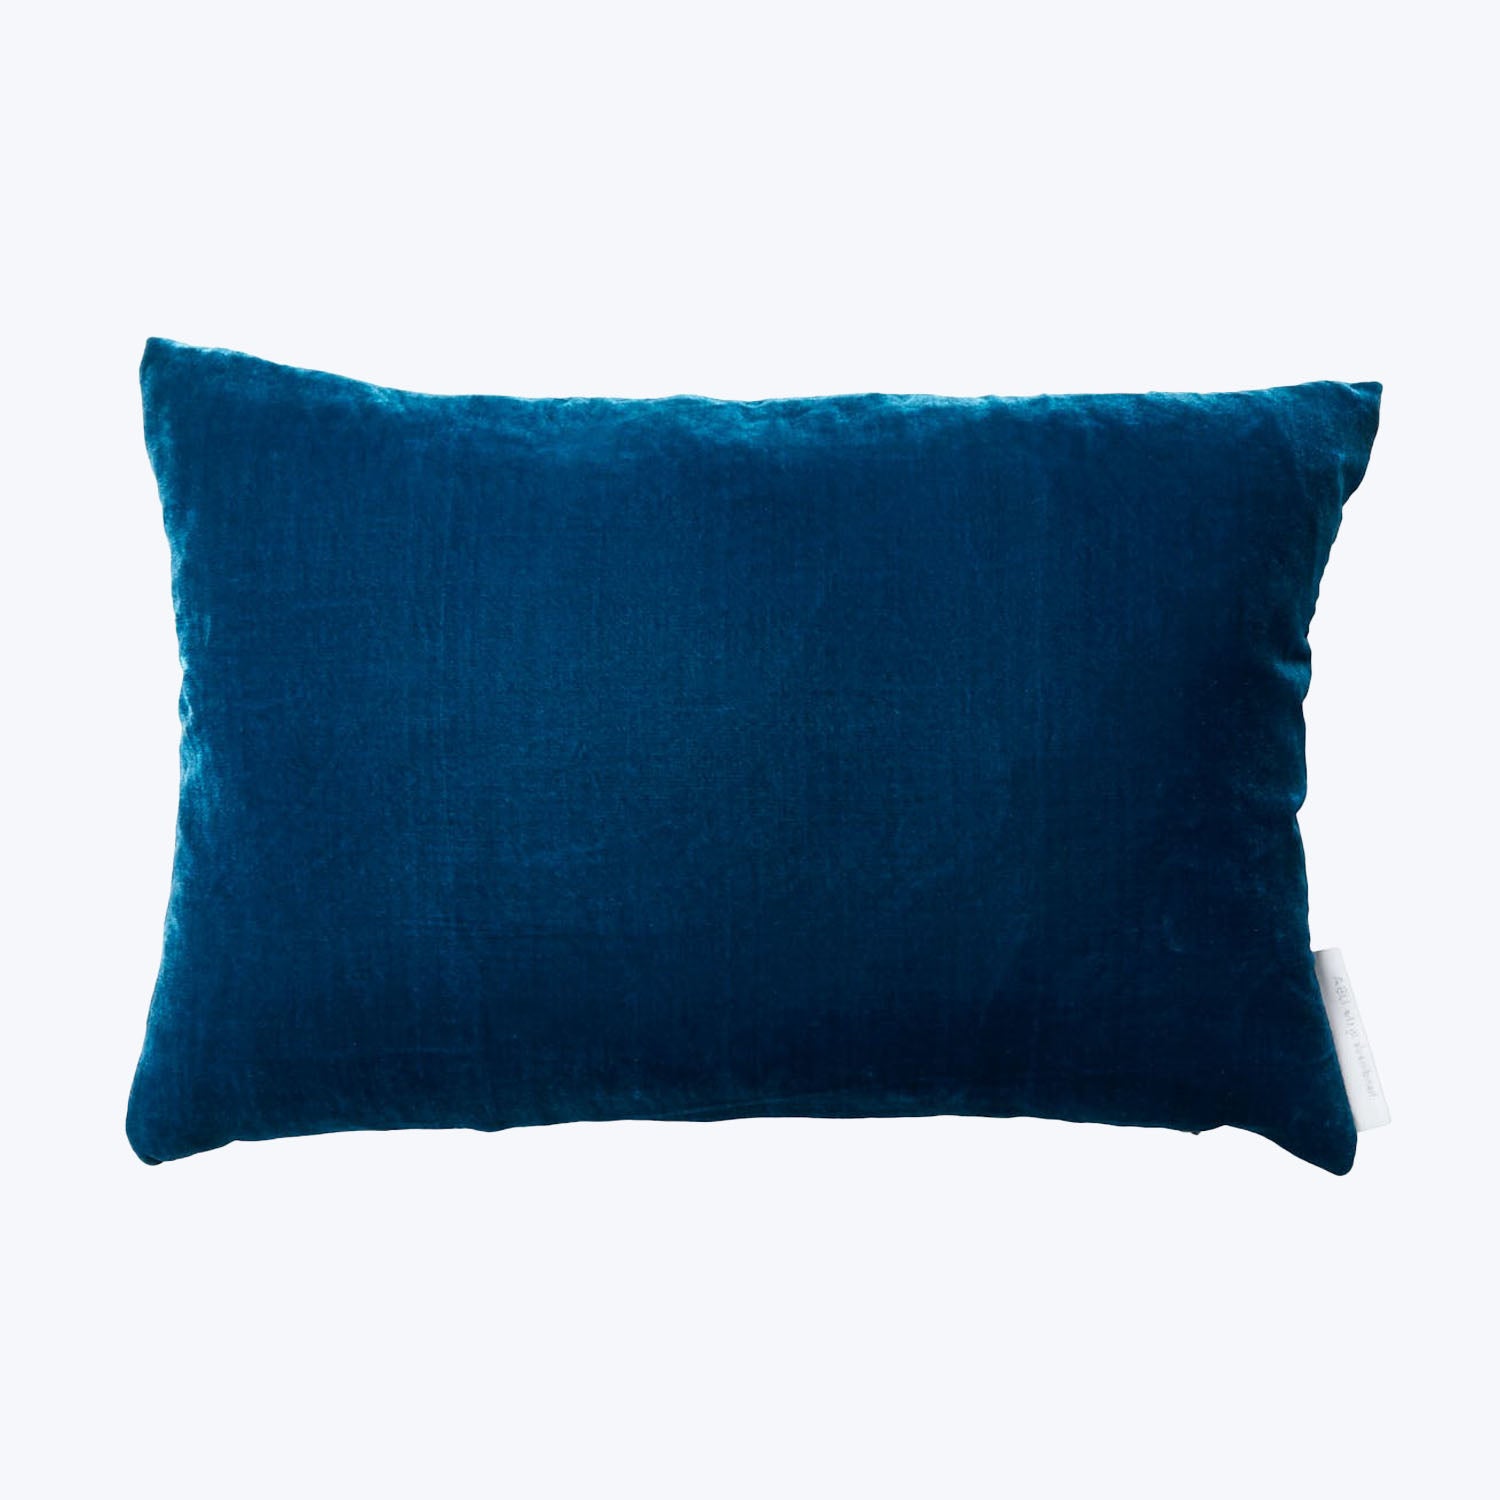 Rectangular deep blue velvet pillow with plush texture on white background.